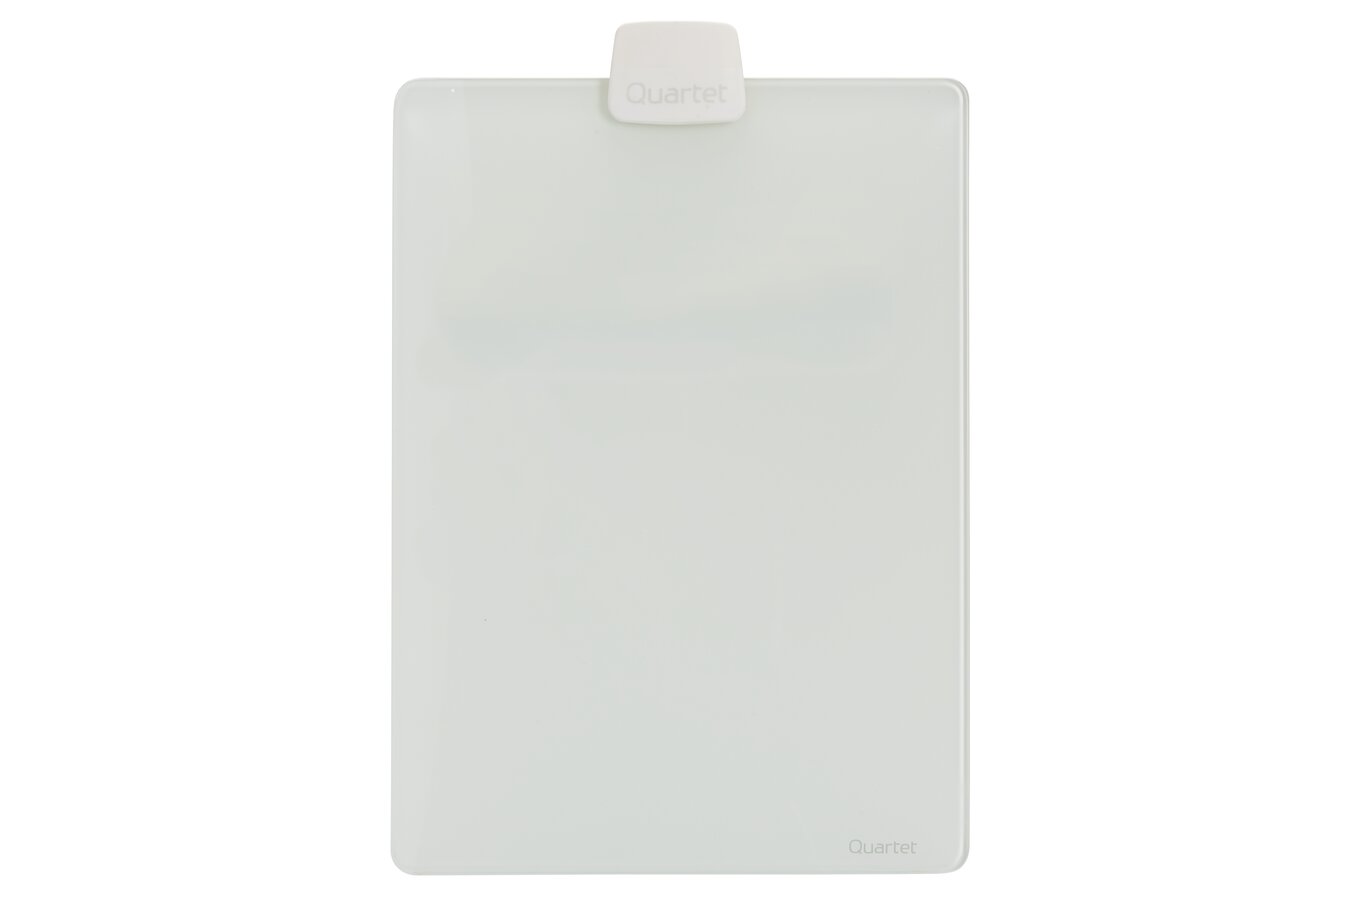 Quartet Anywhere Dry-Erase Sheets - 480 (40 ft) Length - Paper - White -  Easy Tear, Wipeable - 1 Each